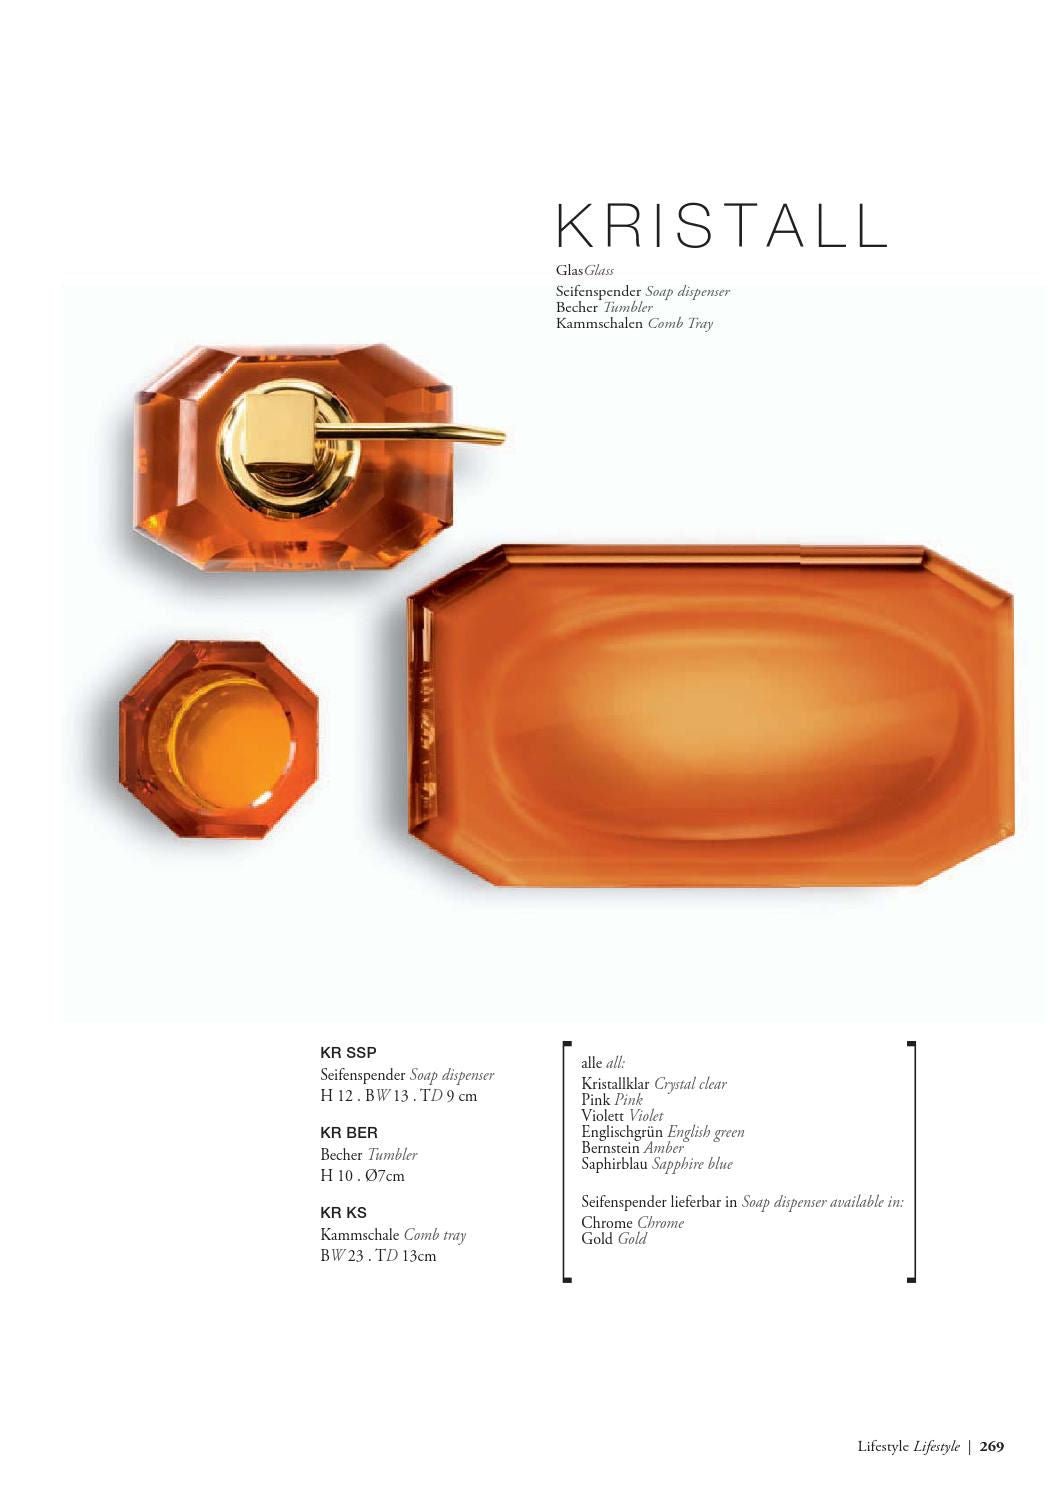 Luxury Matt Gold Crystal Liquid Soap Glass Dispenser | Amber - |VESIMI Design| Luxury Bathrooms & Deco